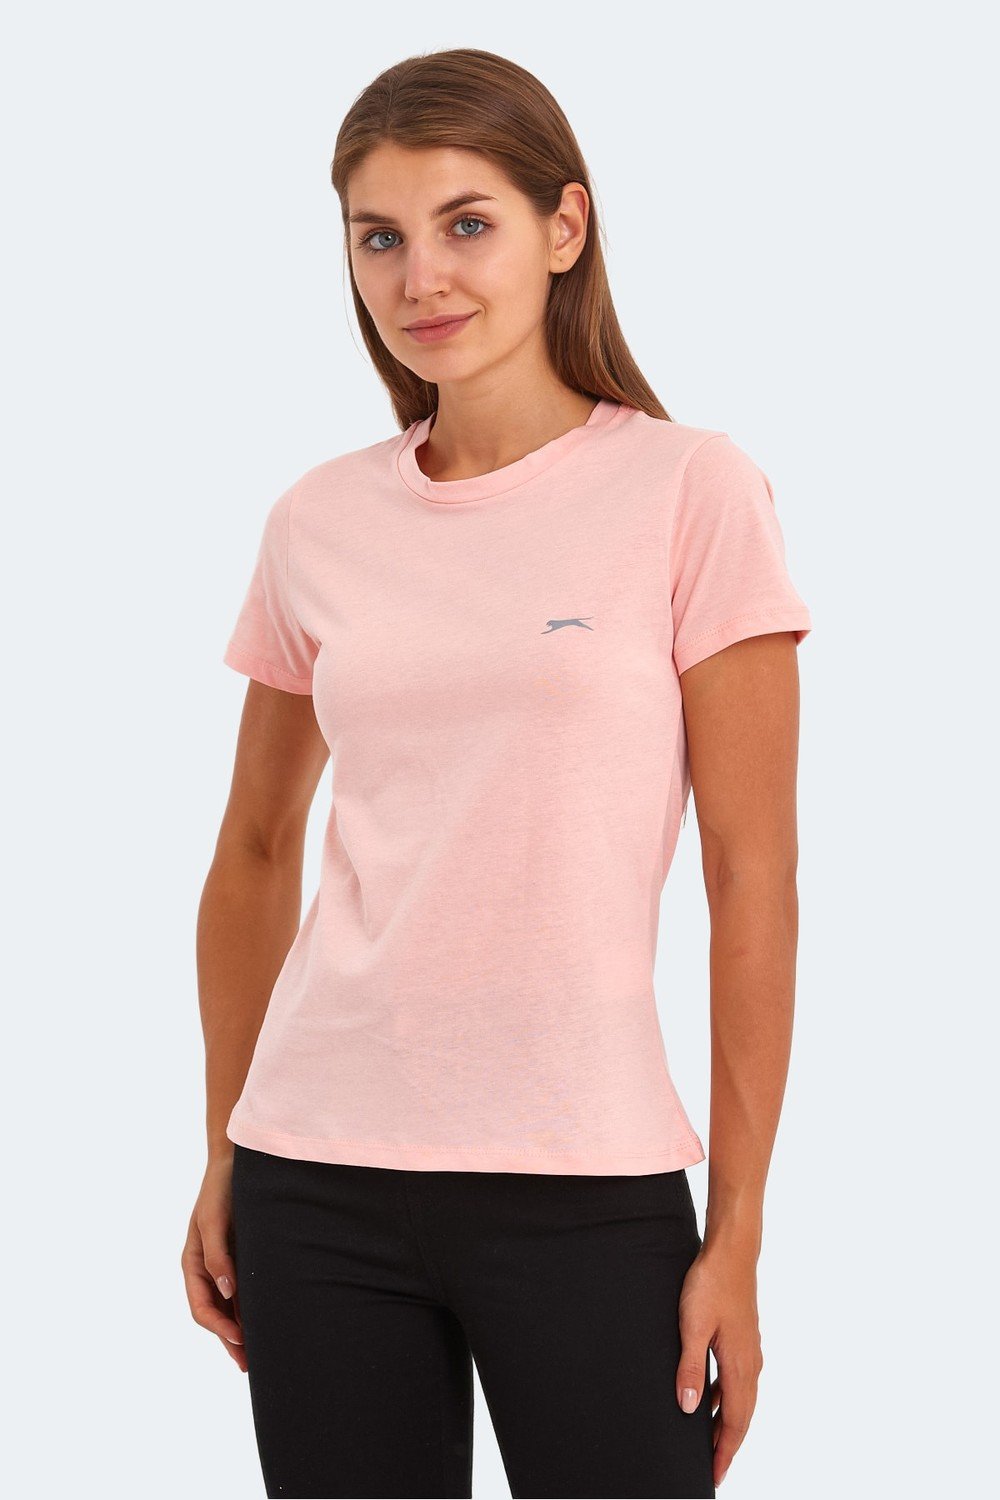 Slazenger T-Shirt - Pink - Crew neck